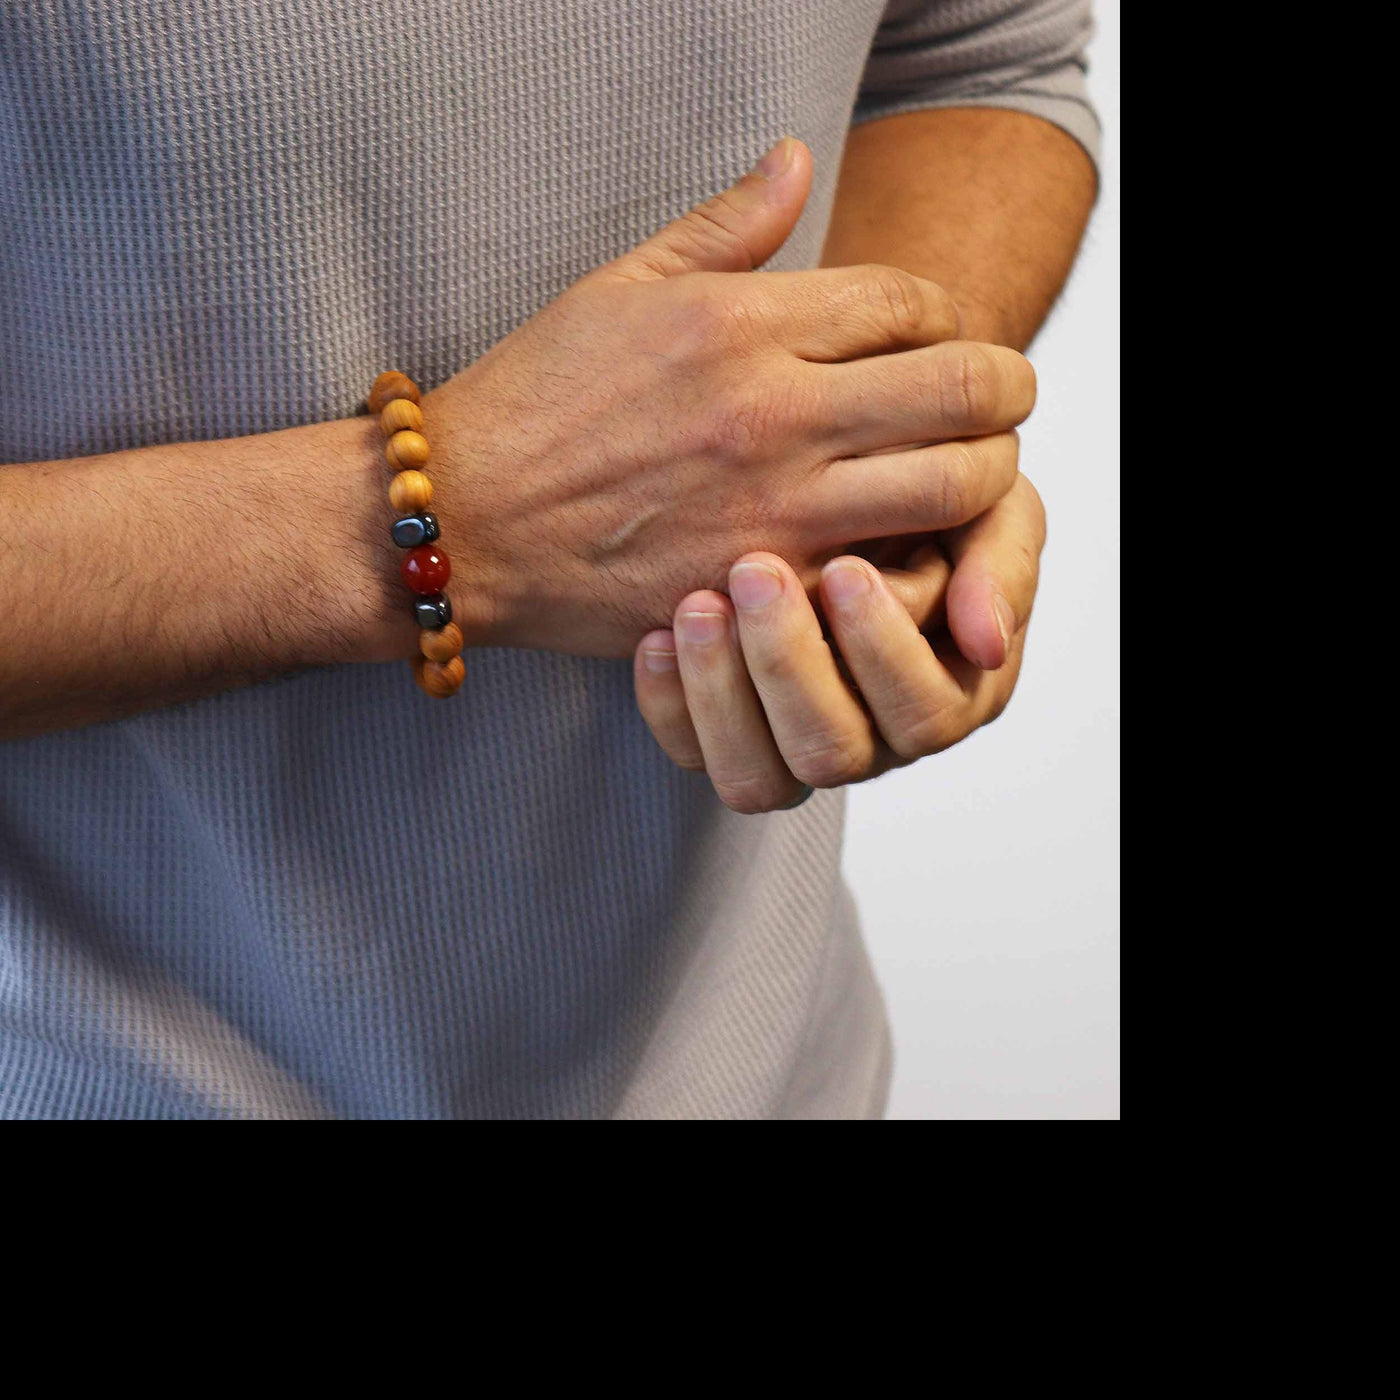 Wellness Cedarwood Root Chakra Bracelet With Red Jasper Gemstone.